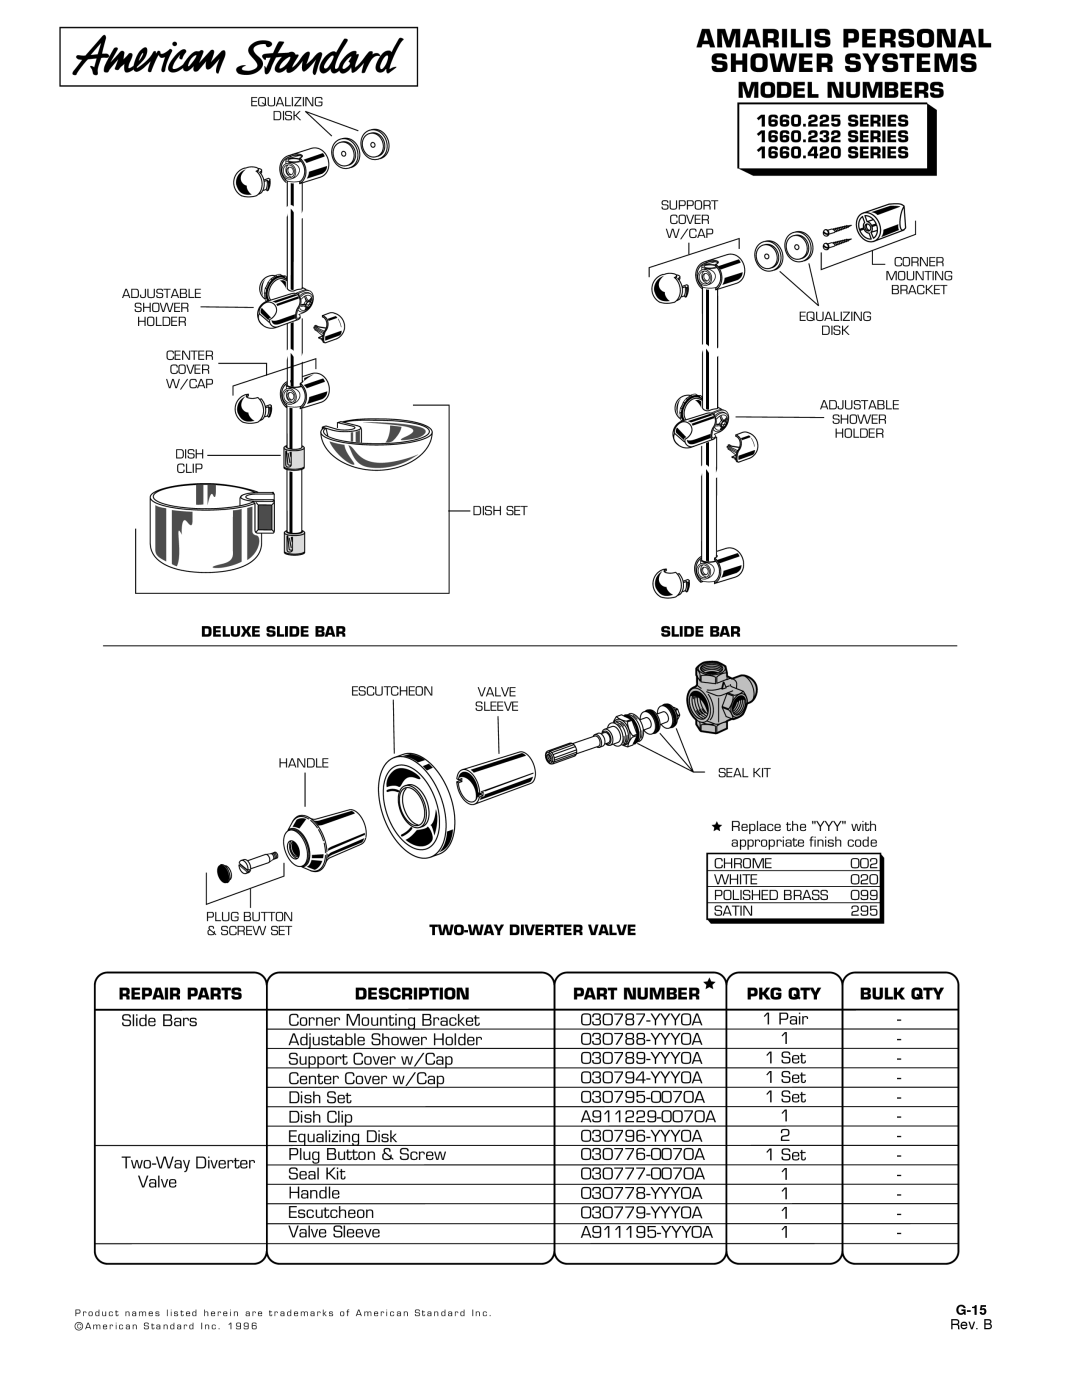 American Standard 1660.420 SERIES manual Amarilis Personal Shower Systems, Model Numbers, Repair Parts, Description 